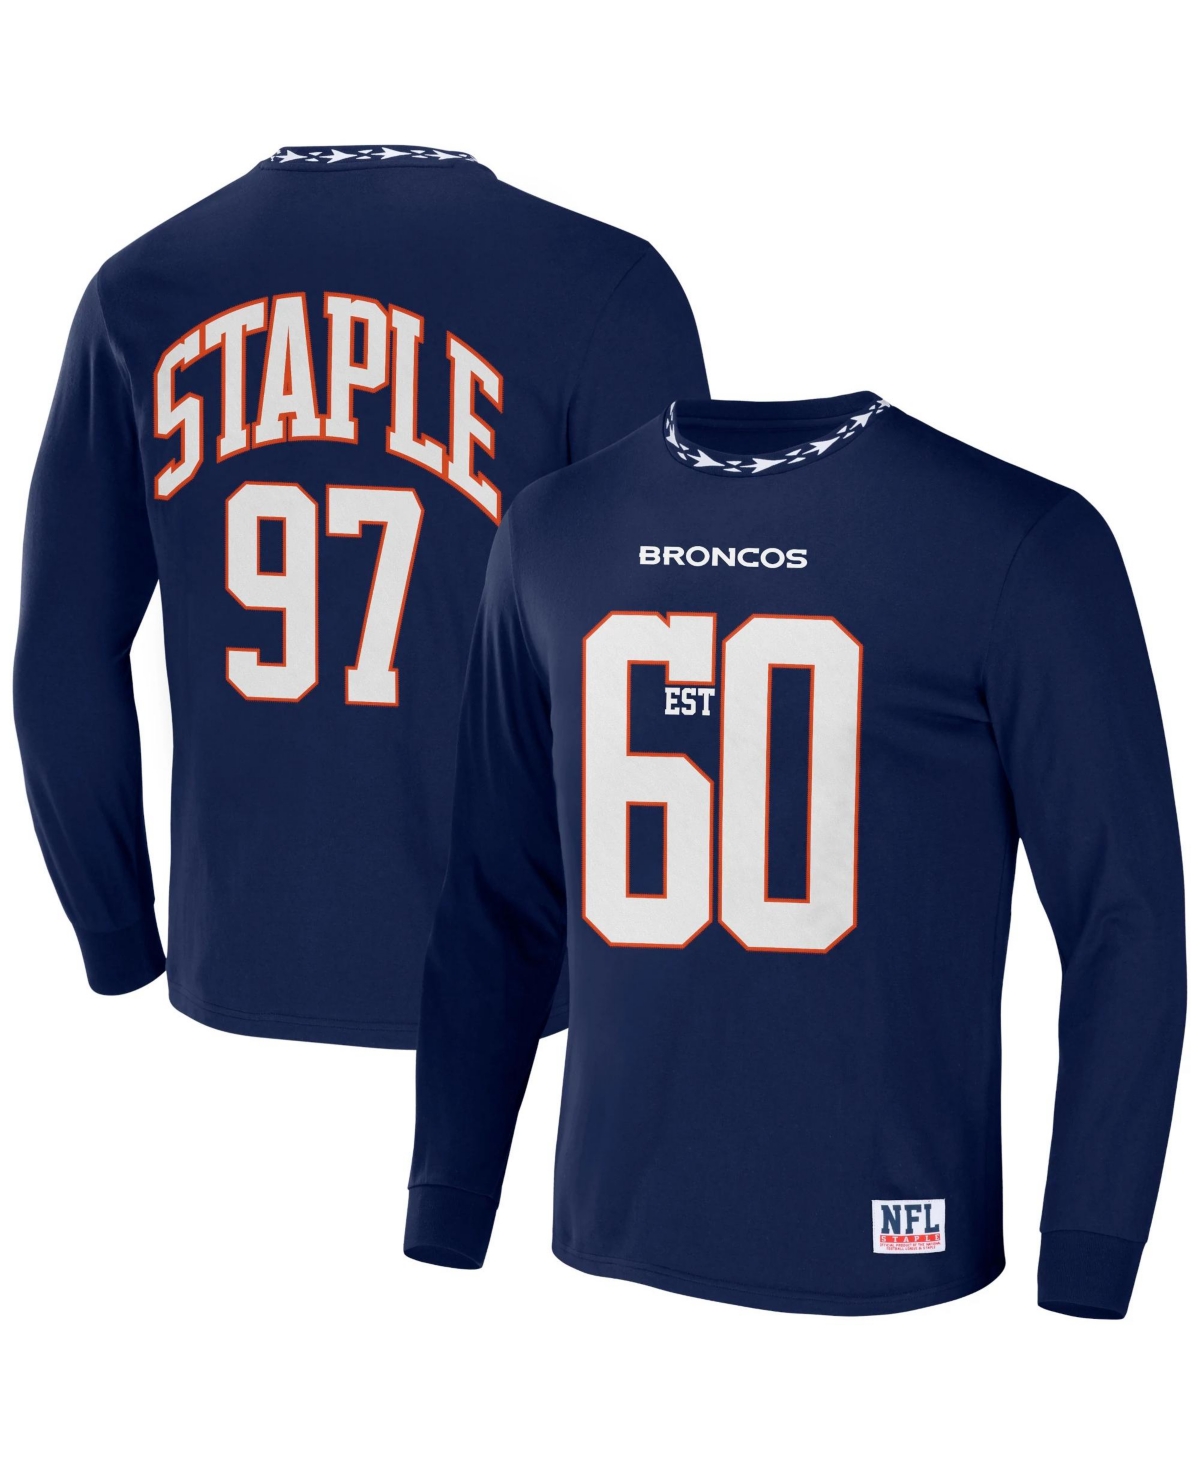 Men's Nfl X Staple Navy Denver Broncos Core Long Sleeve Jersey Style T-shirt - Navy